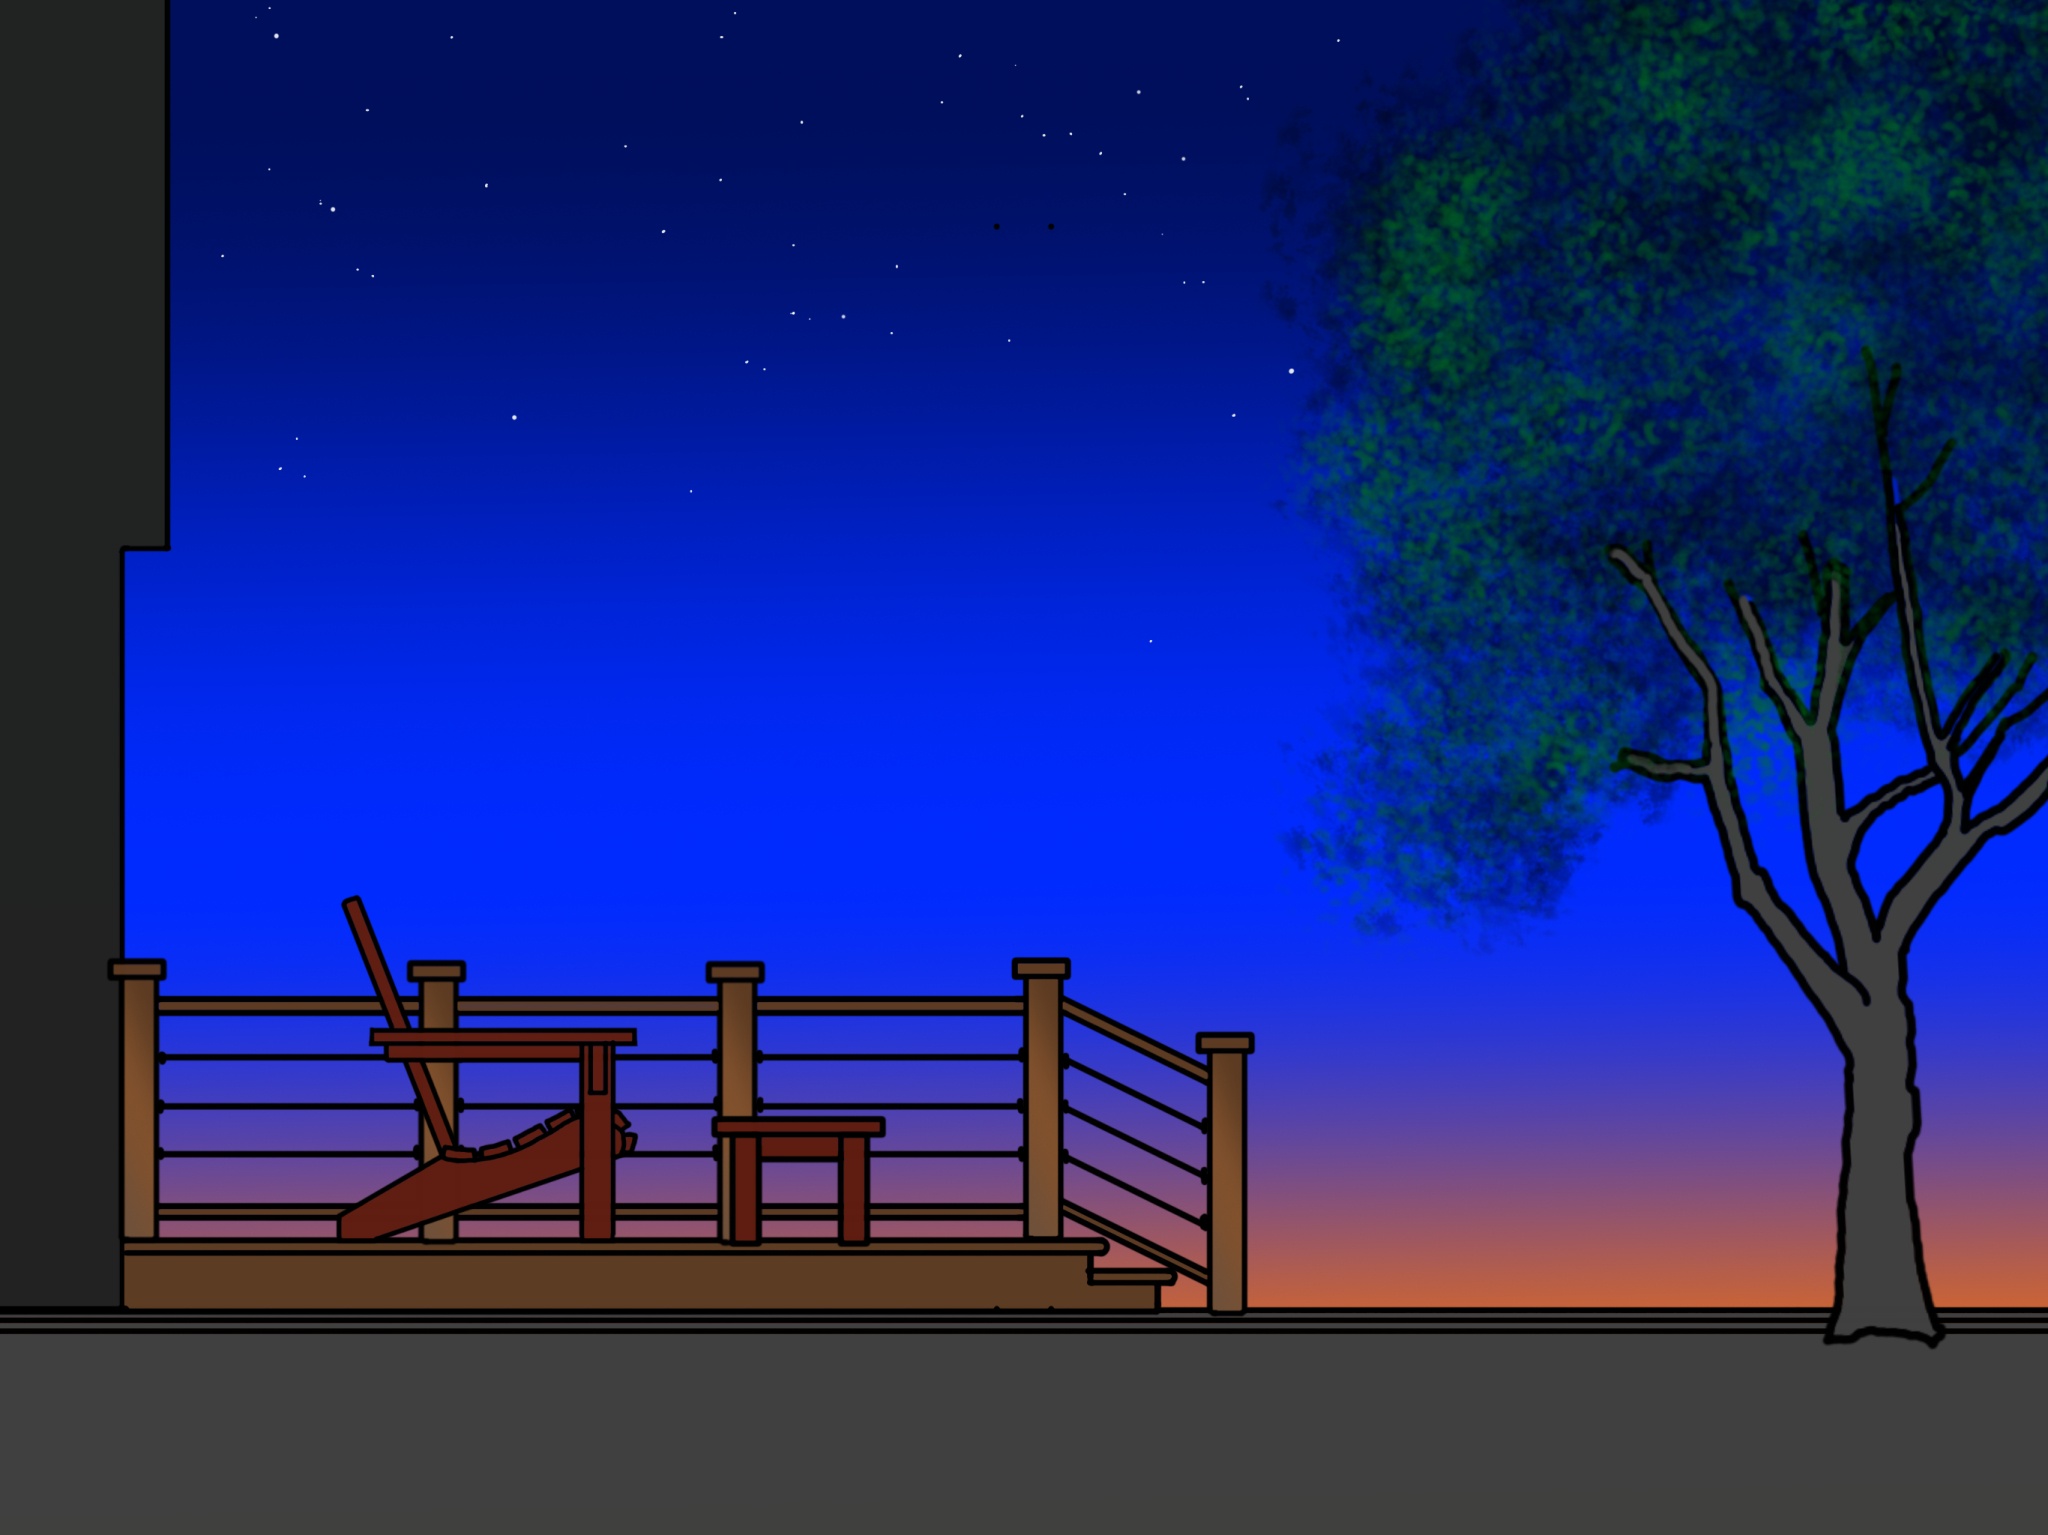 An illustration of a deck at dusk